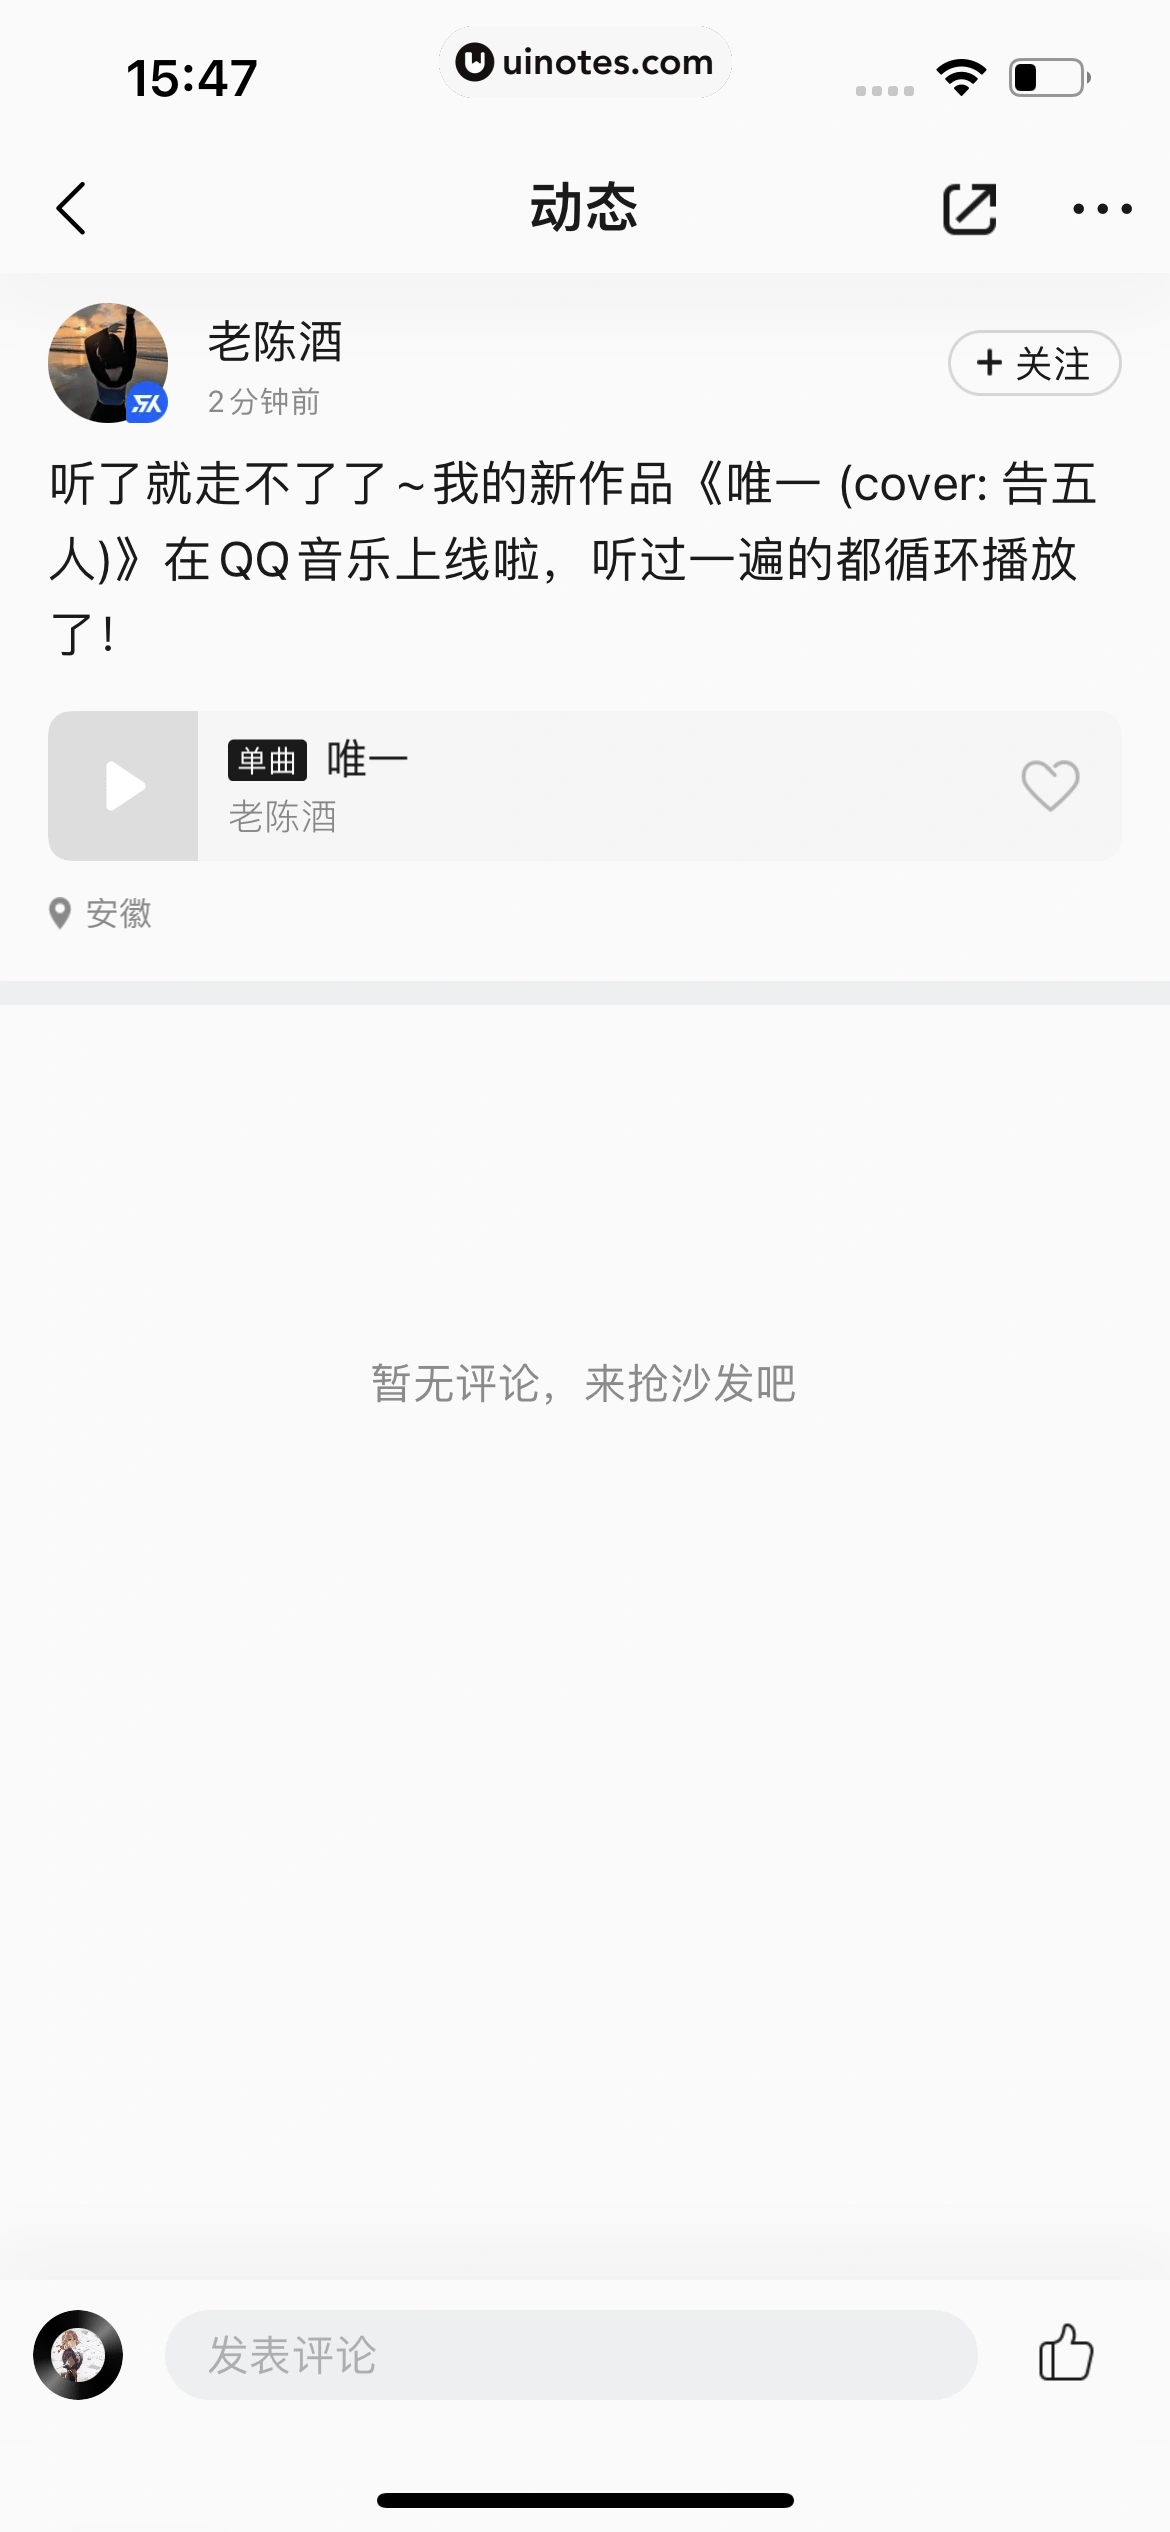 QQ音乐 App 截图 407 - UI Notes